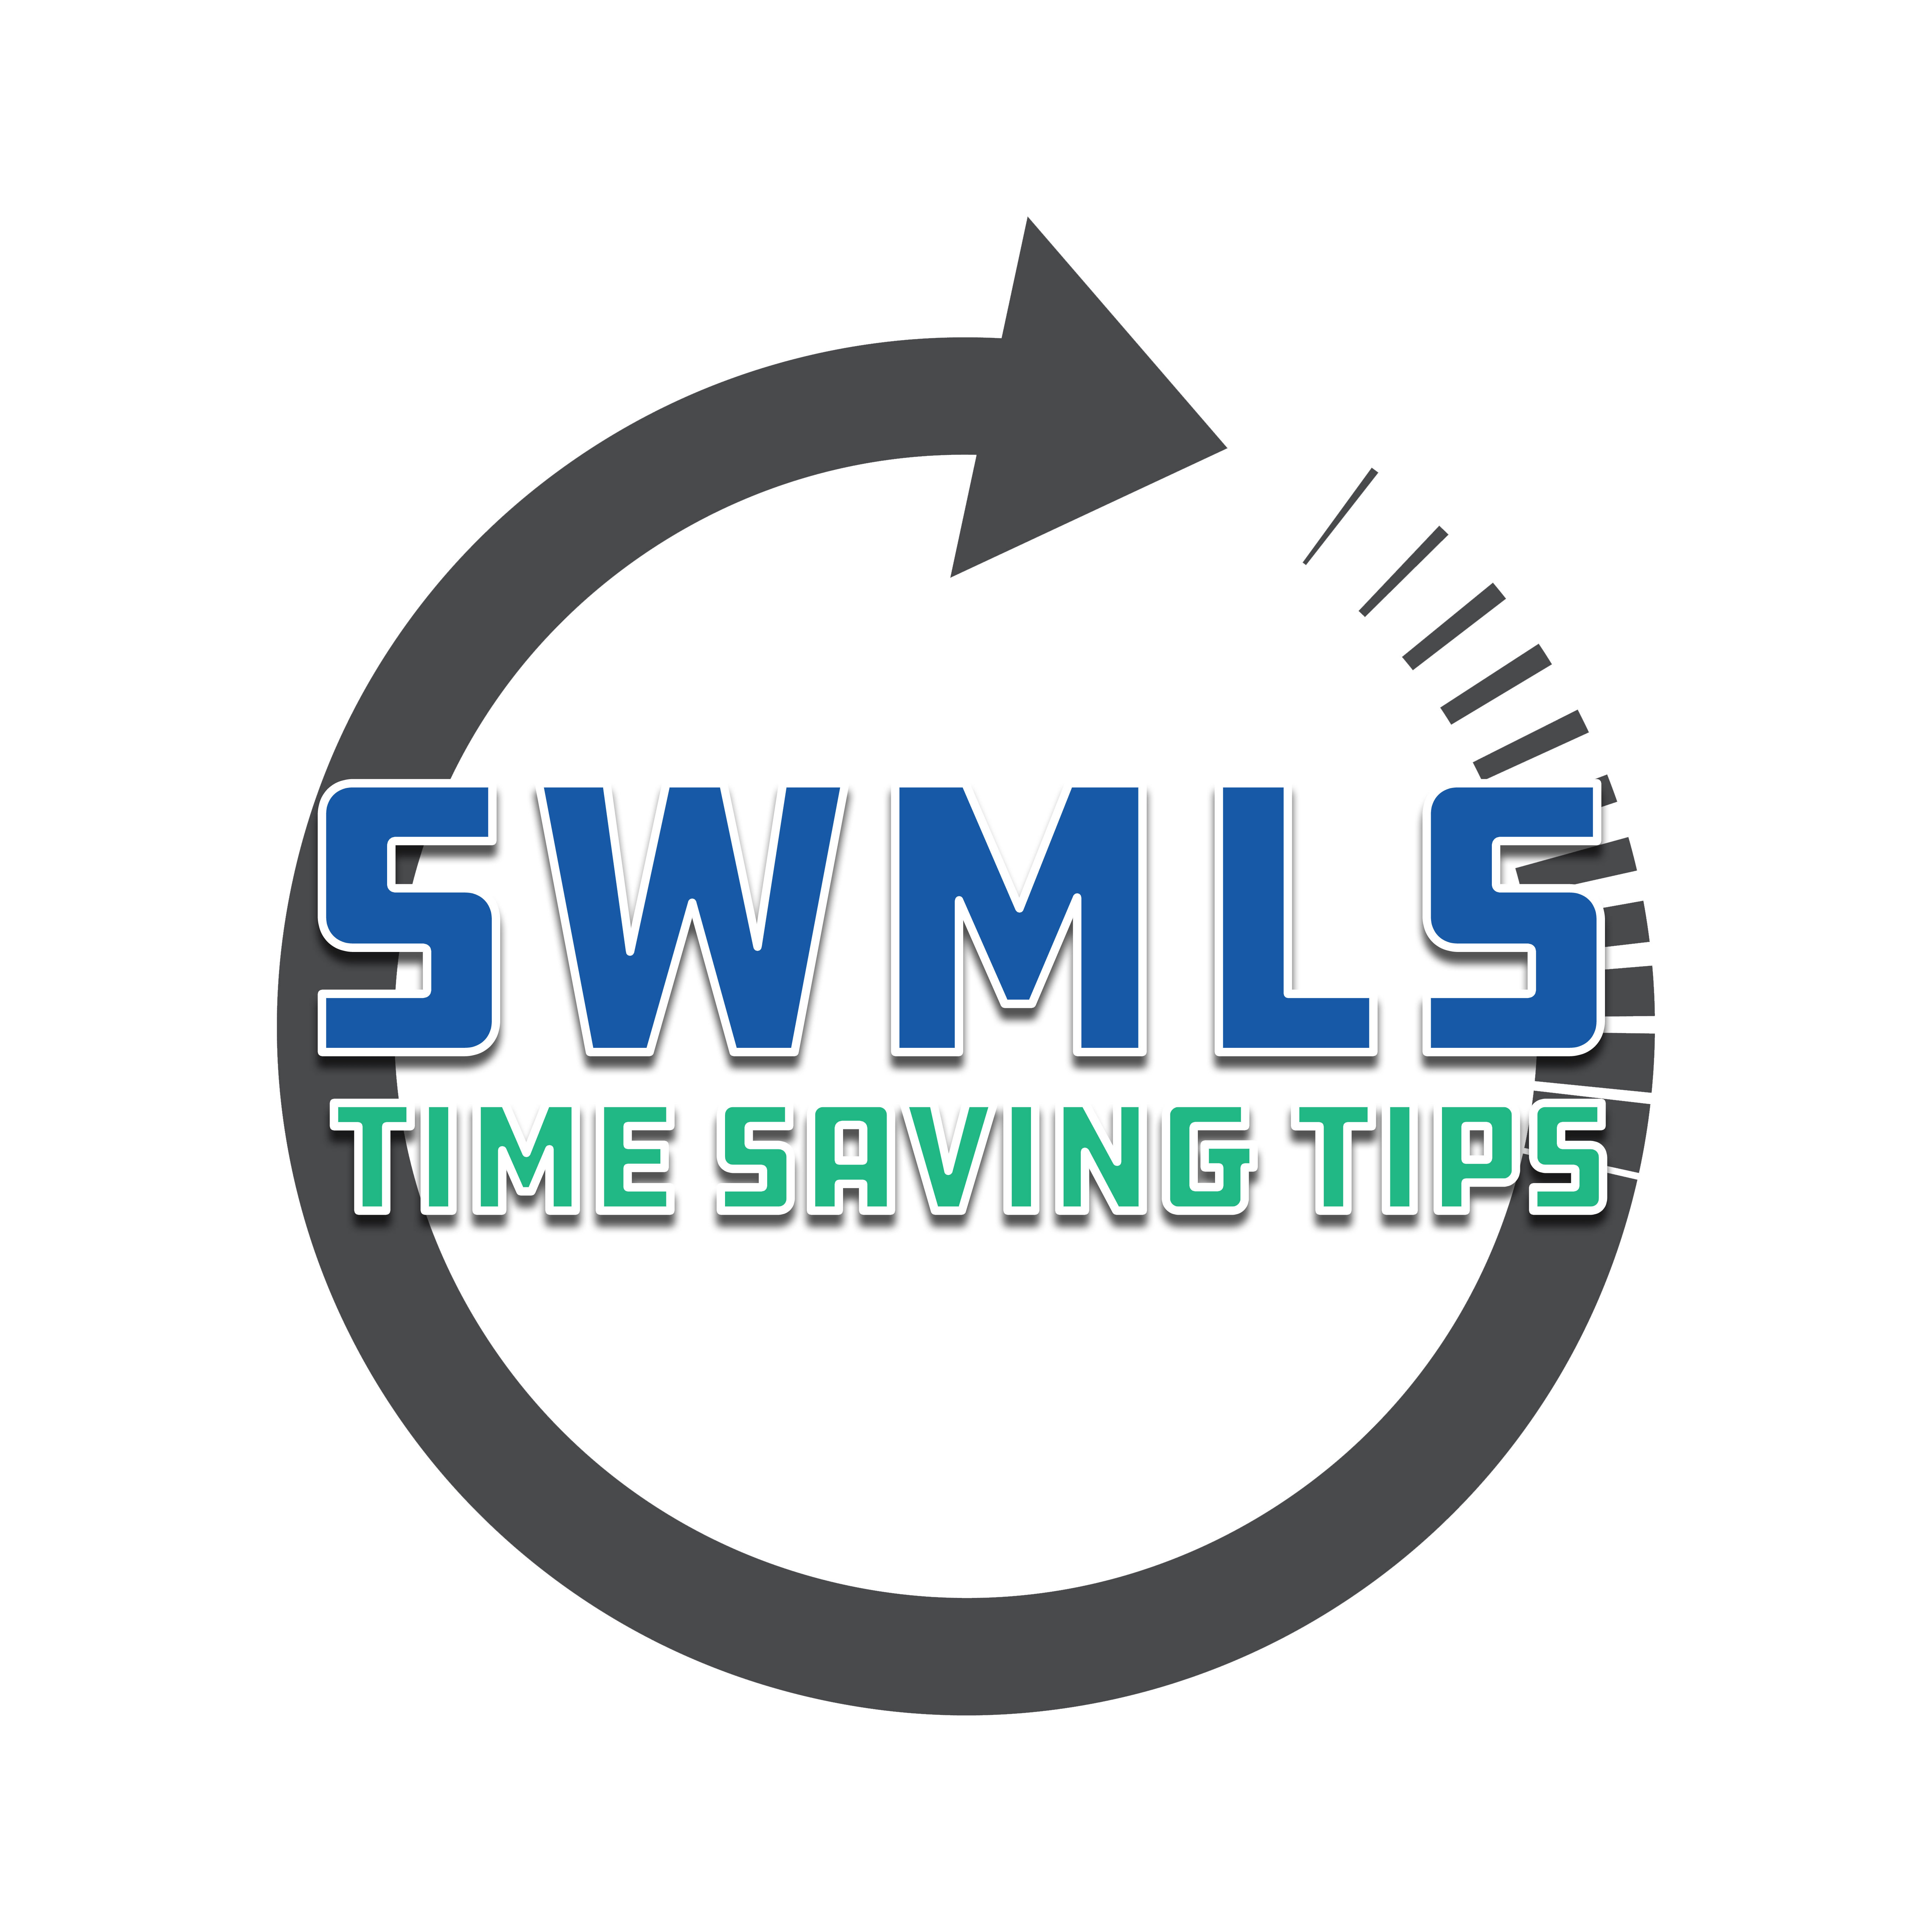 SWMLS Time Saver Tips: Reorganize Custom Lists